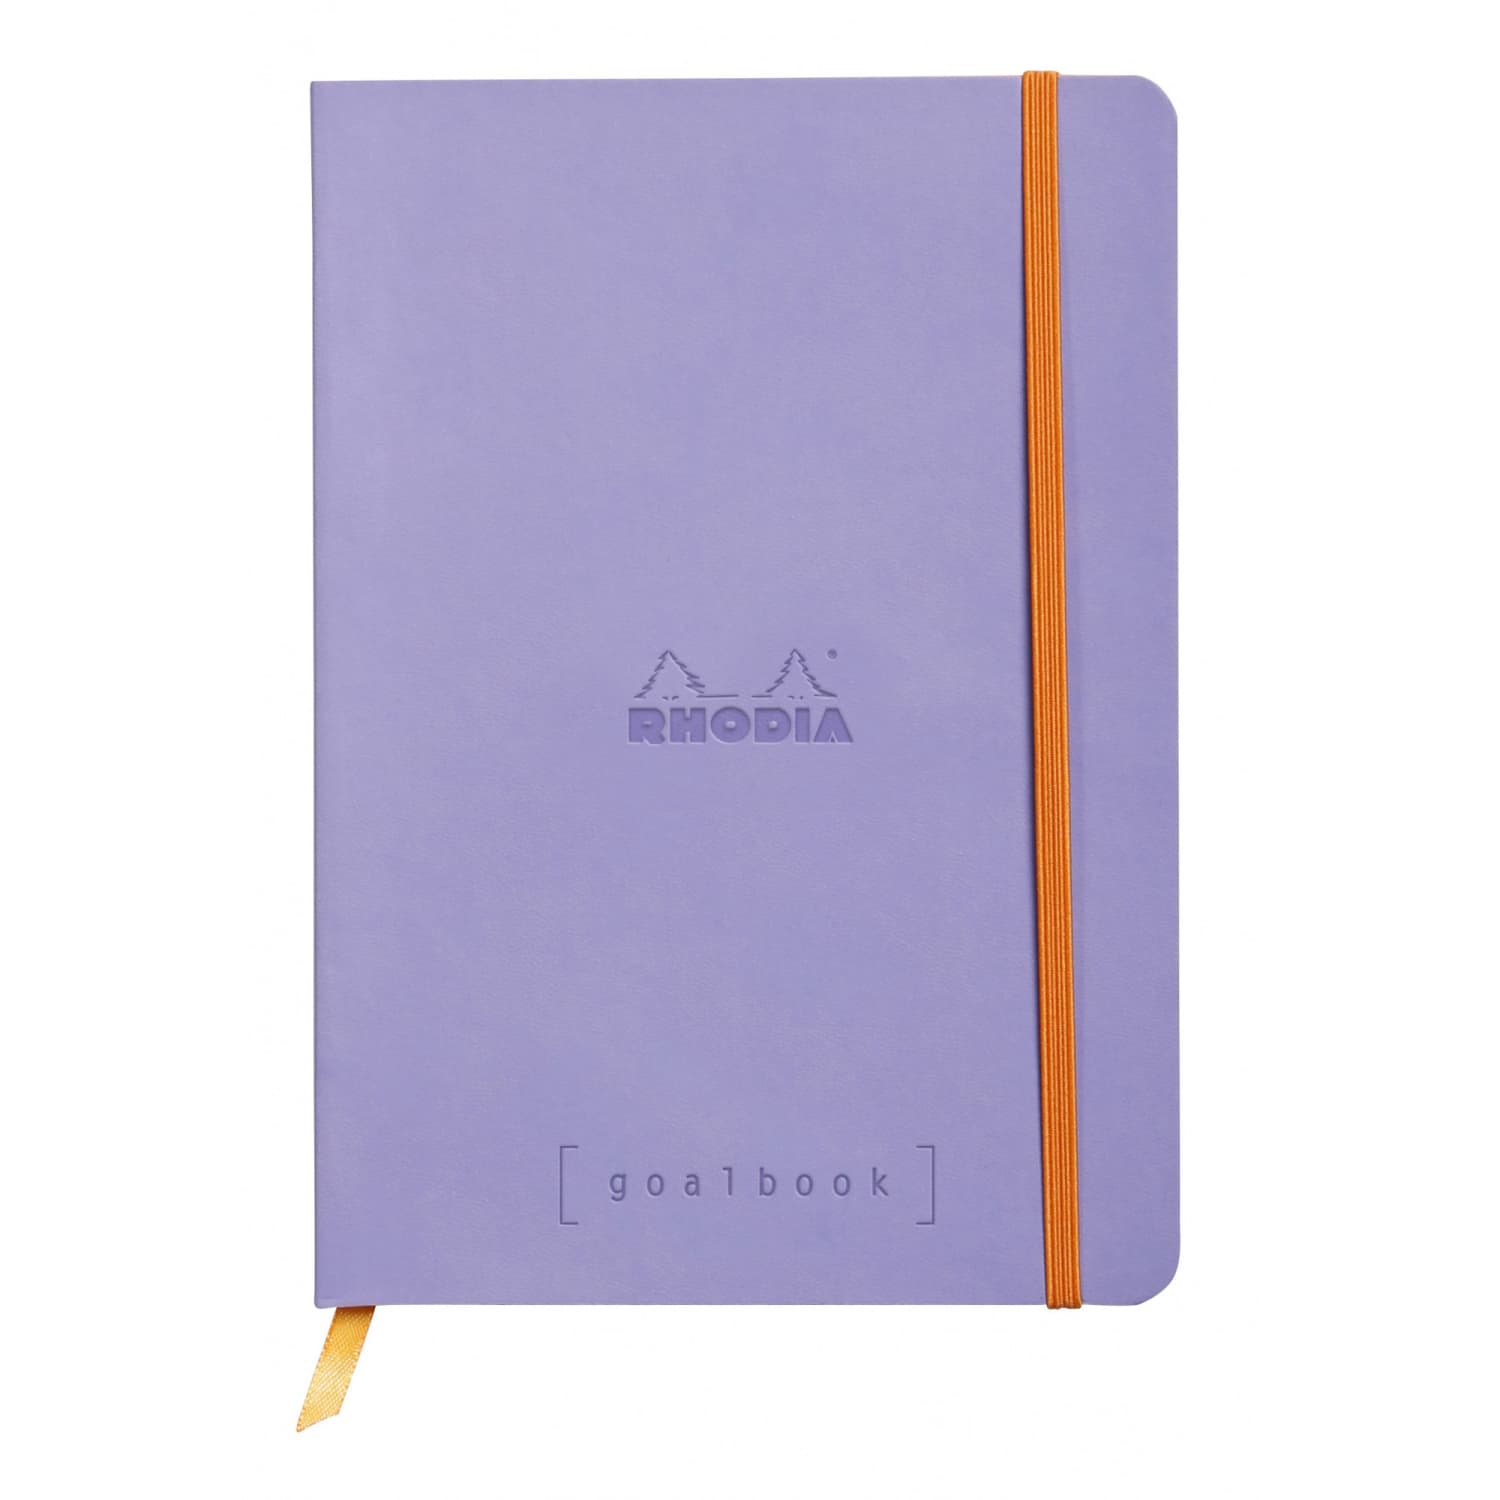 Rhodia Goalbook A5 Dot Grid Notebook in Iris - 5.75 x 8.25